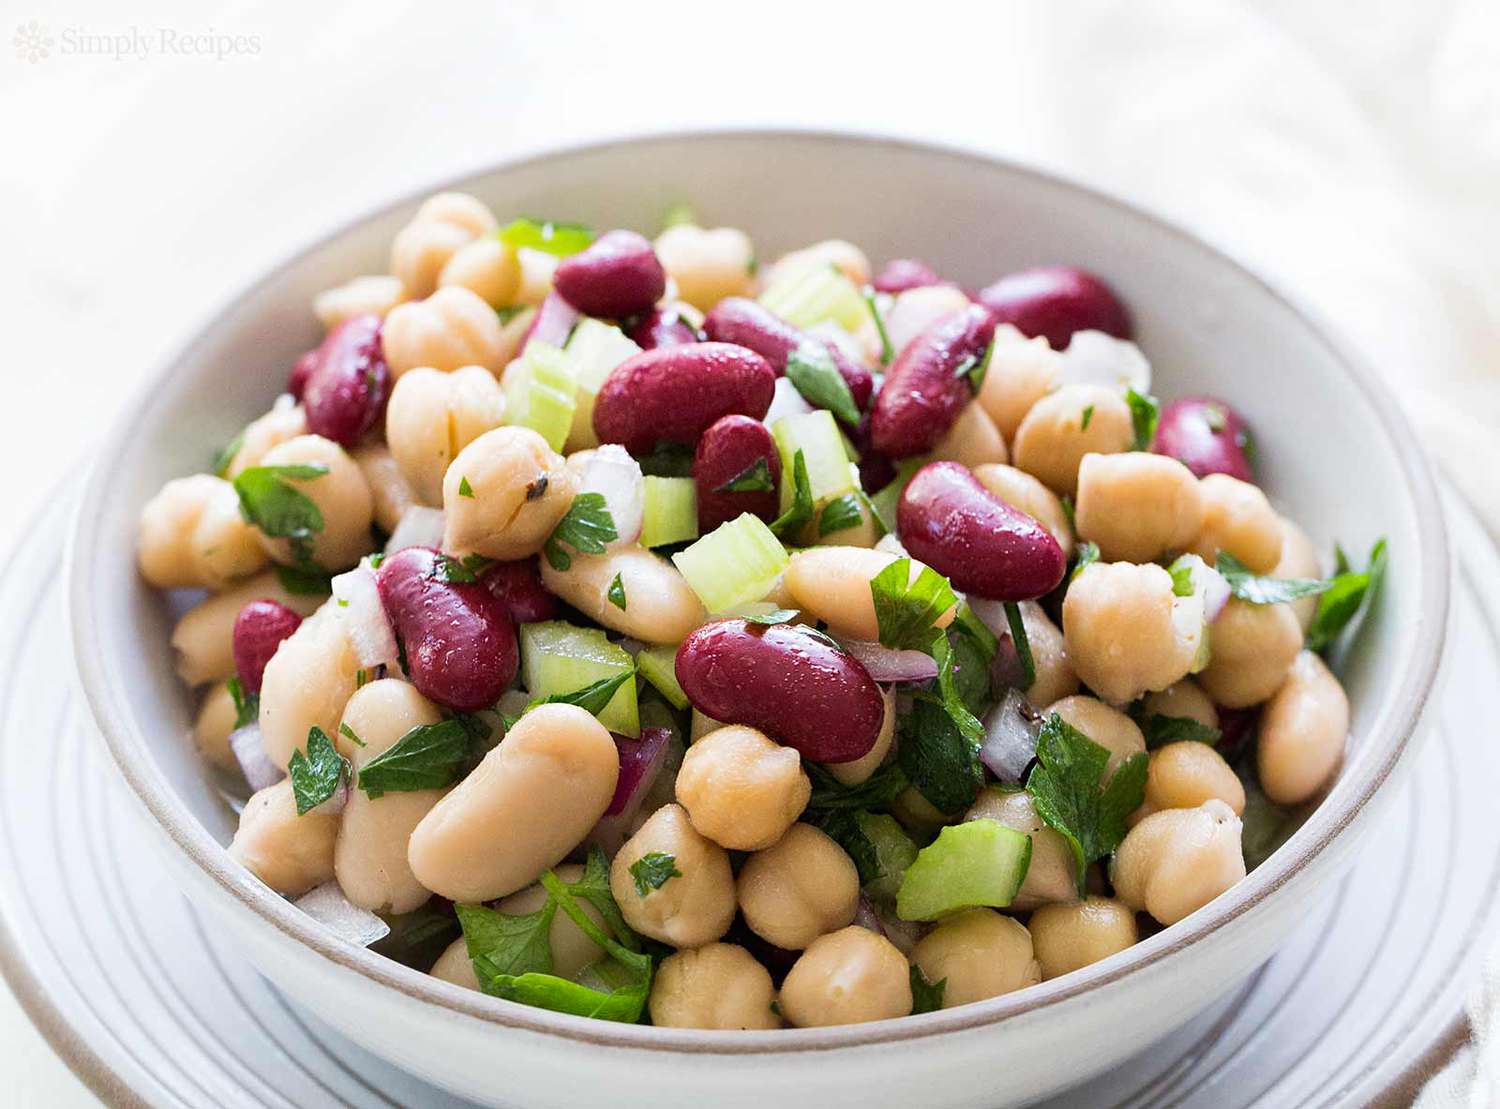 DIY Recipes: How to make beans salad